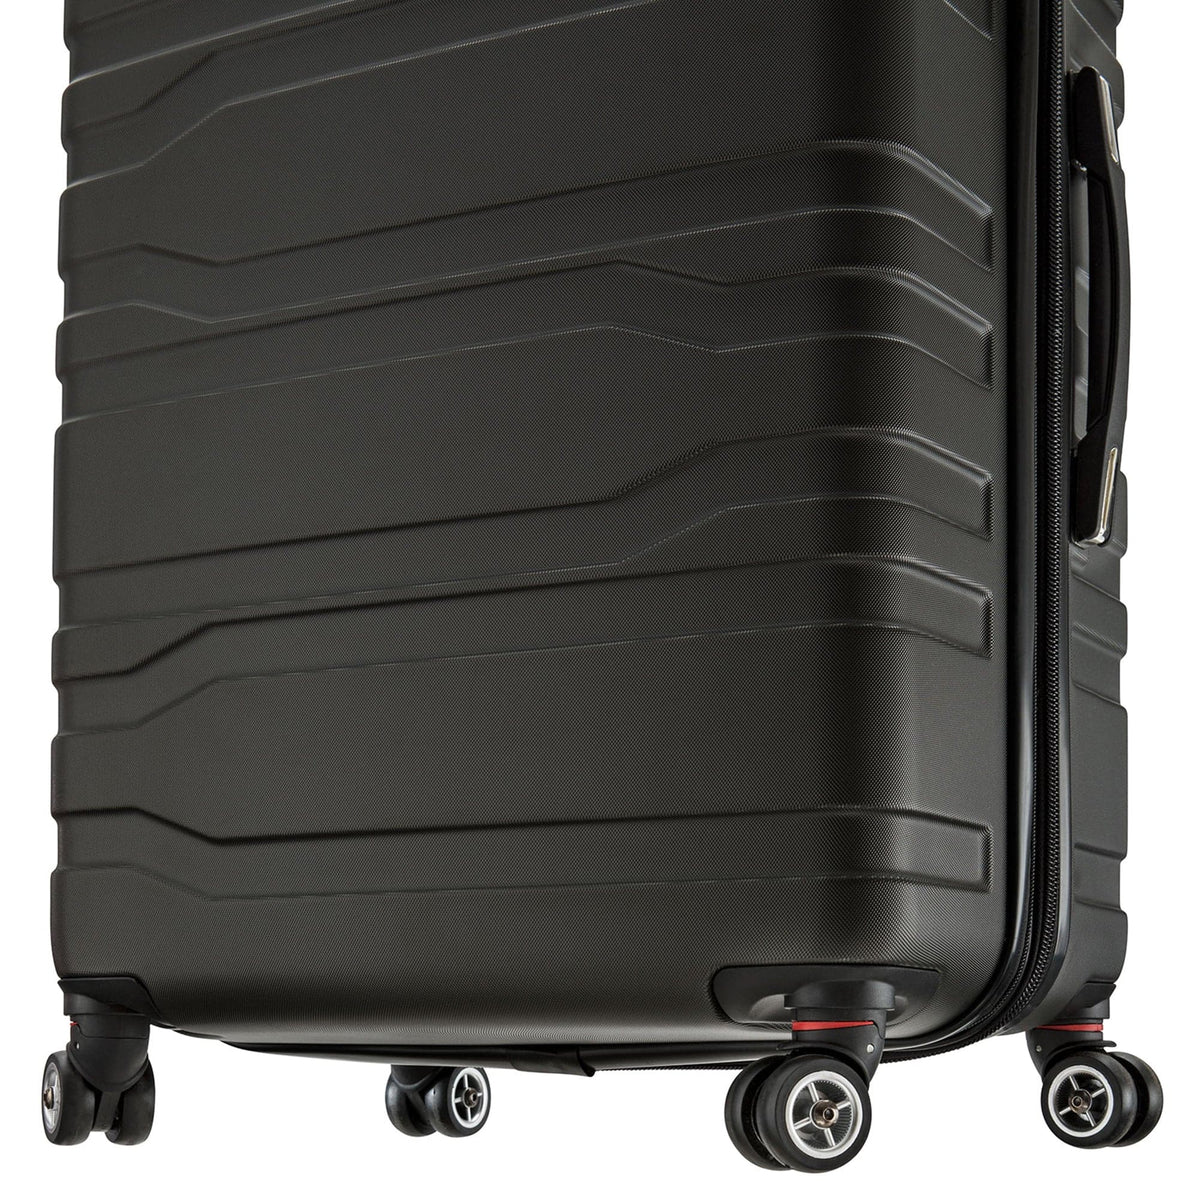 Mancini San Marino 20" Carry-on Lightweight Spinner Luggage